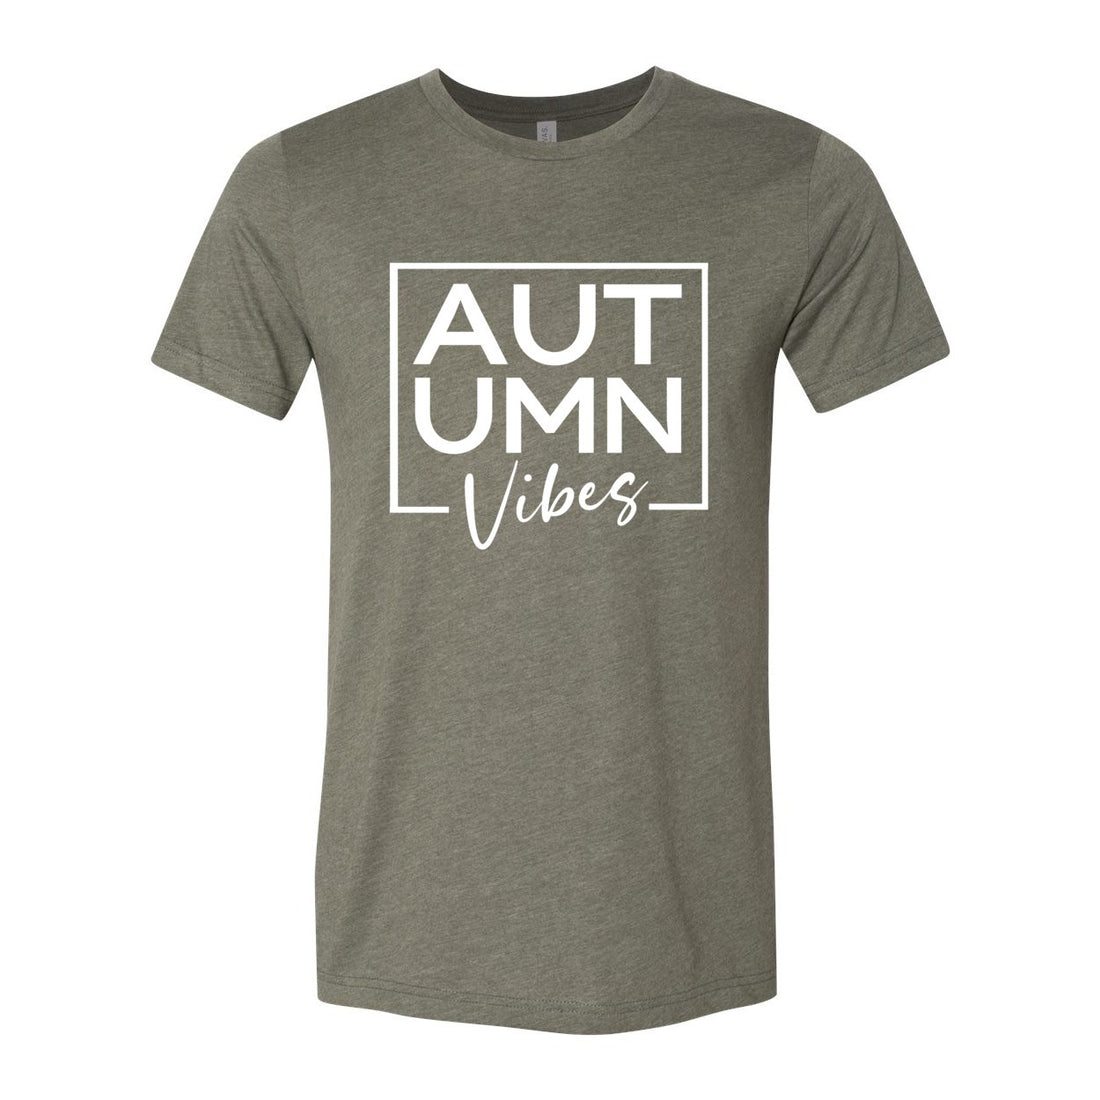 Autumn Vibes - T-Shirts - Positively Sassy - Autumn Vibes